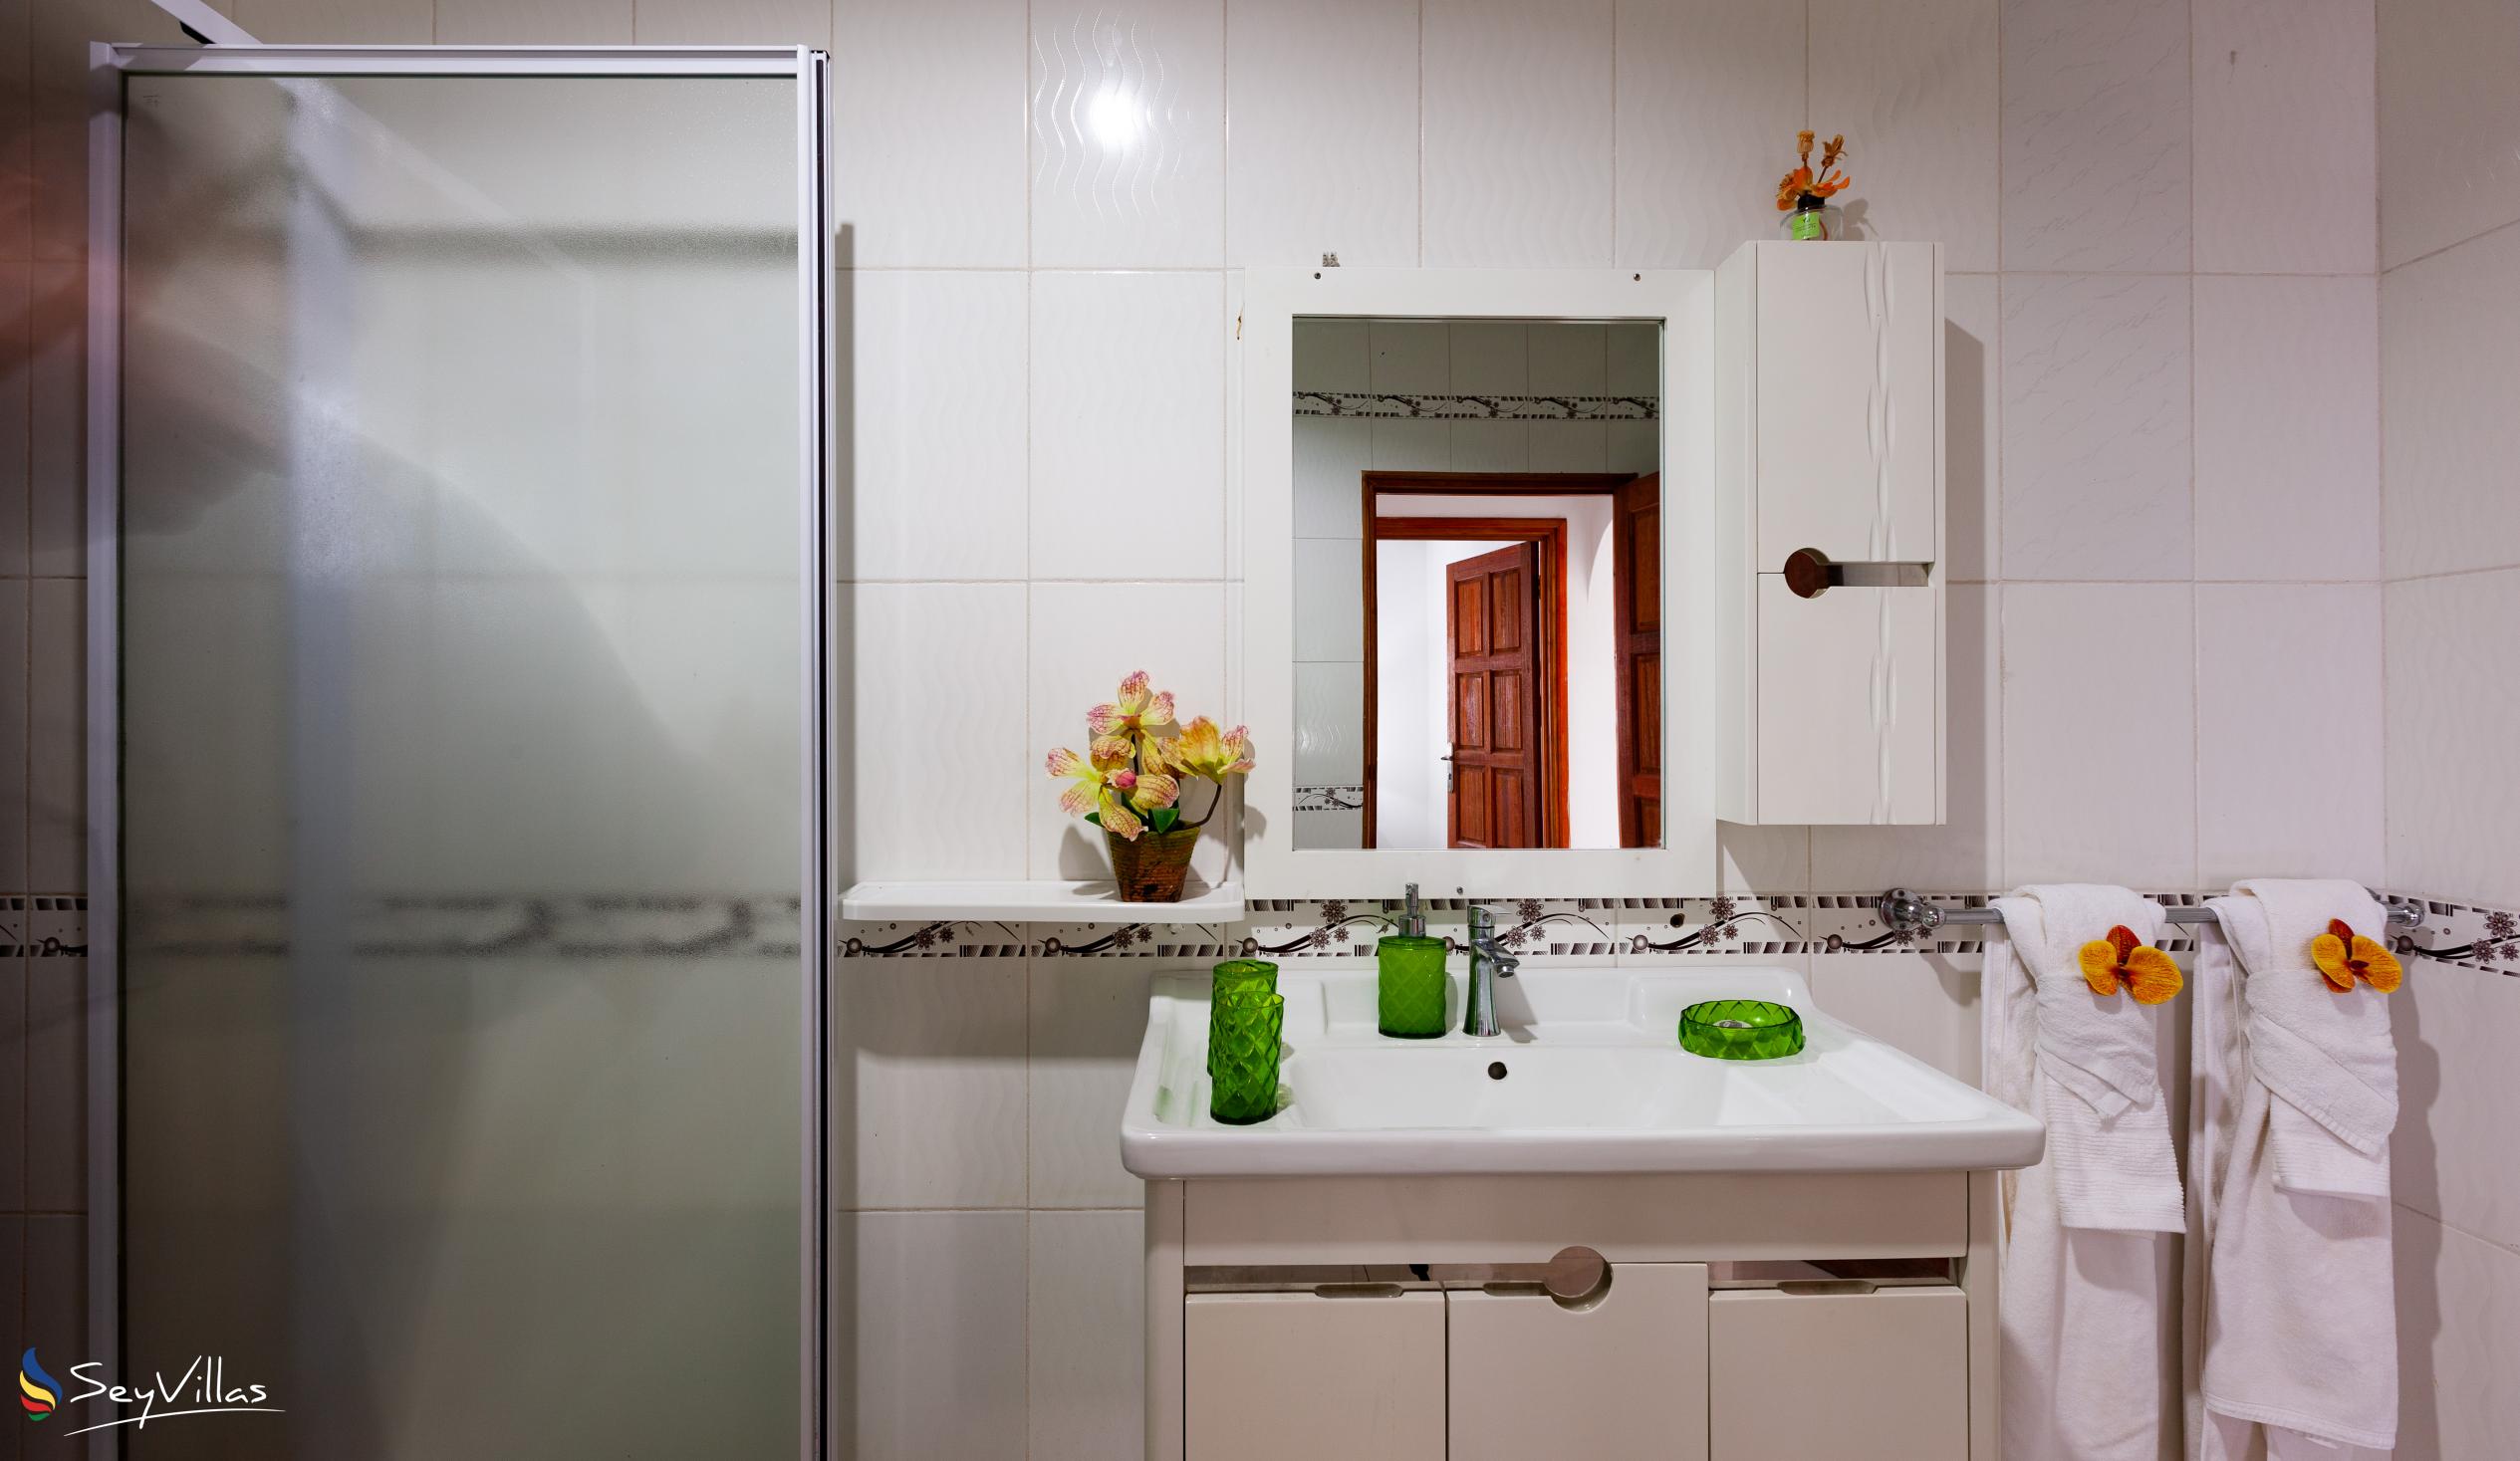 Photo 60: Belle Vacance Self Catering - 1-Bedroom Apartment - Praslin (Seychelles)